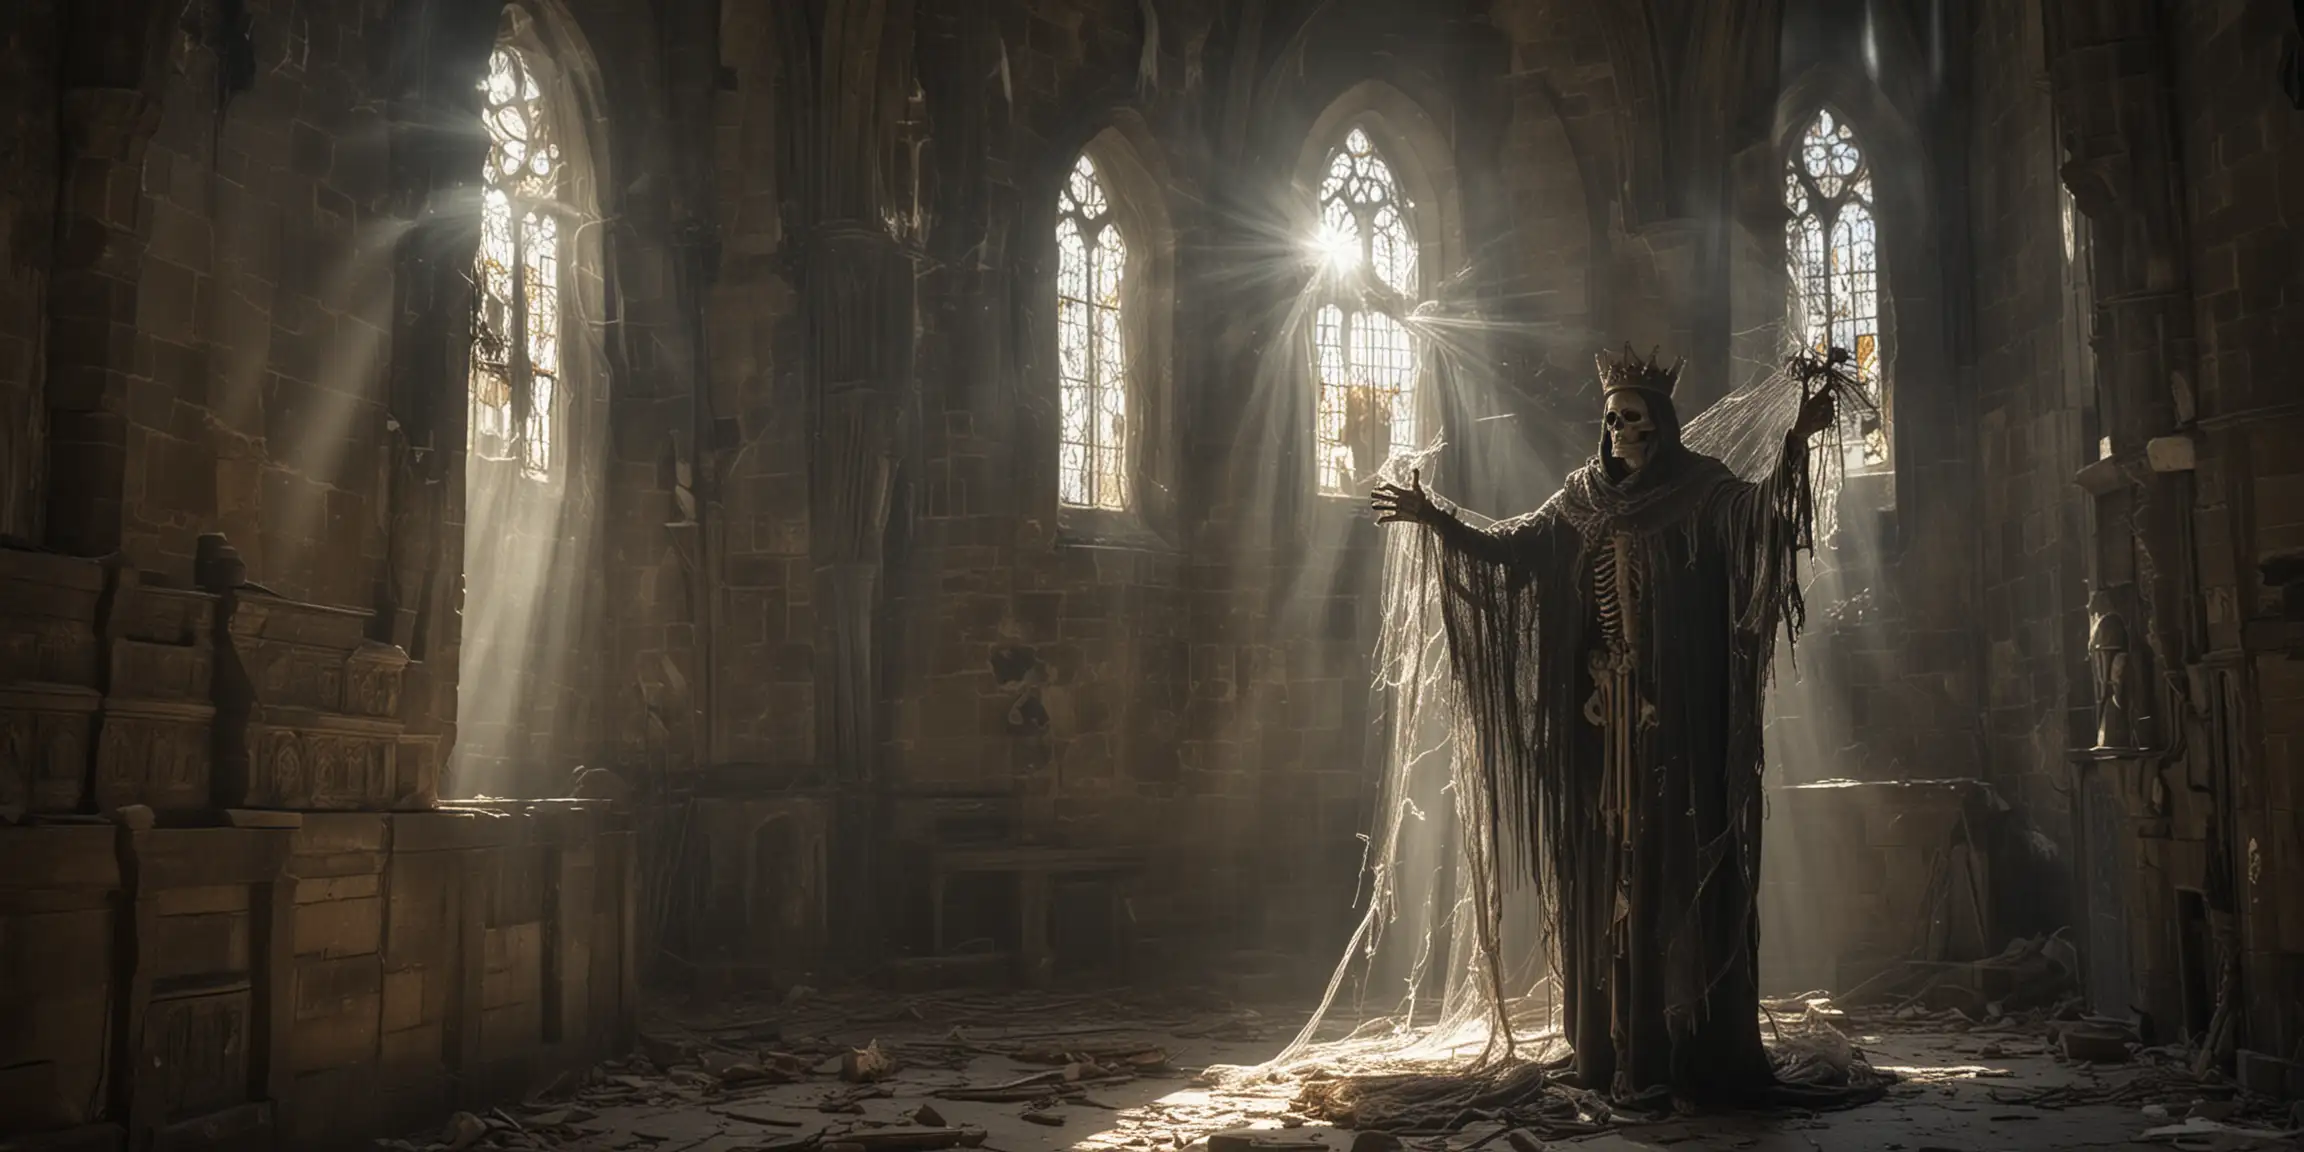 Skeleton king, robe, cobwebs, old, breaking, old church, ray of light